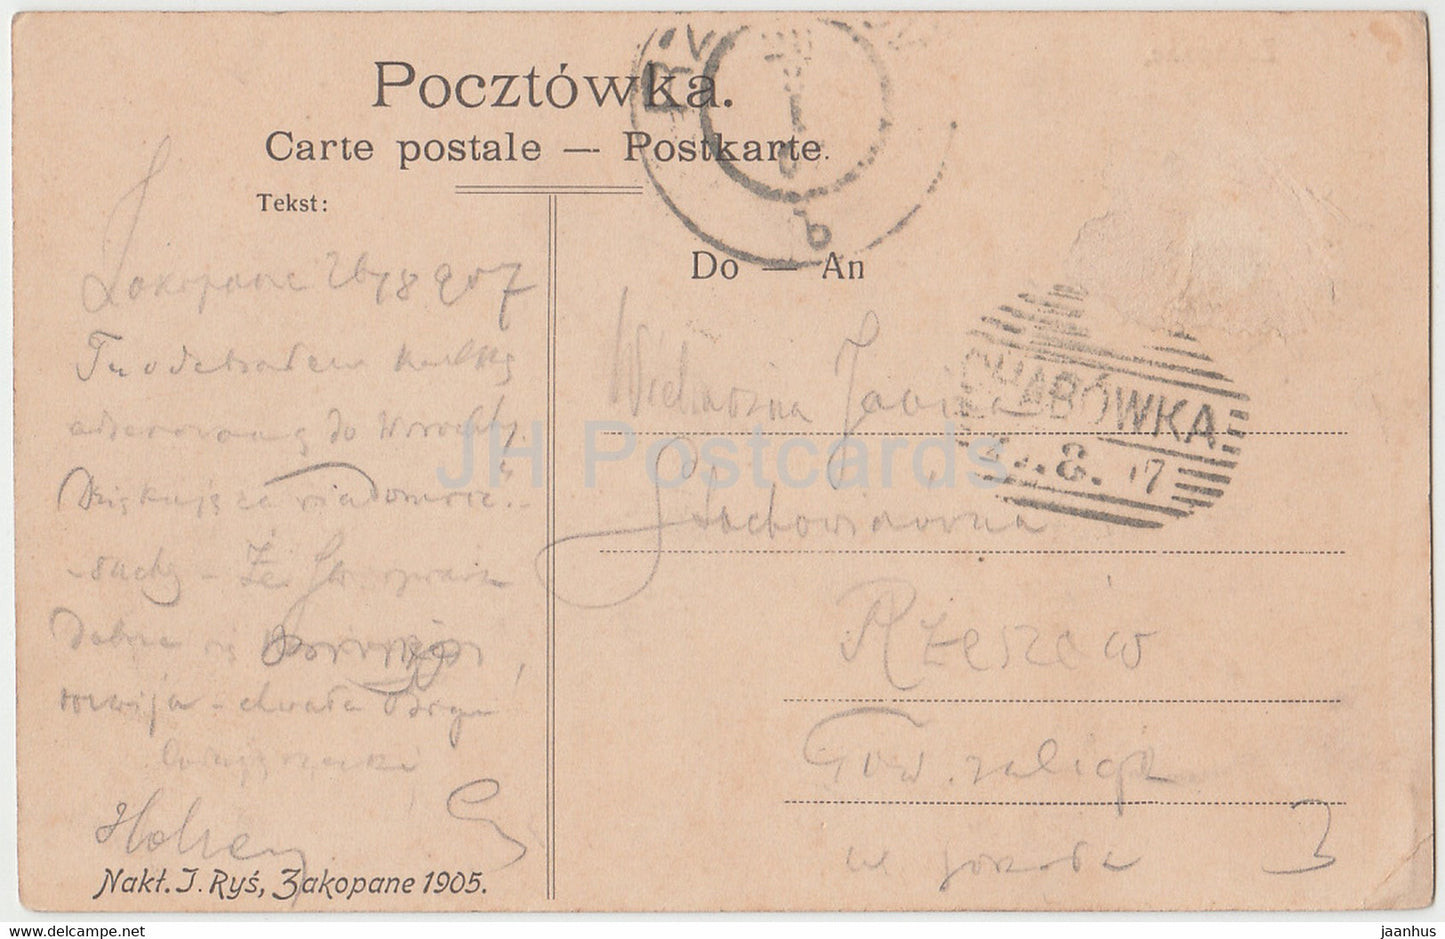 Zakopane - alte Postkarte - 1907 - Polen - gebraucht